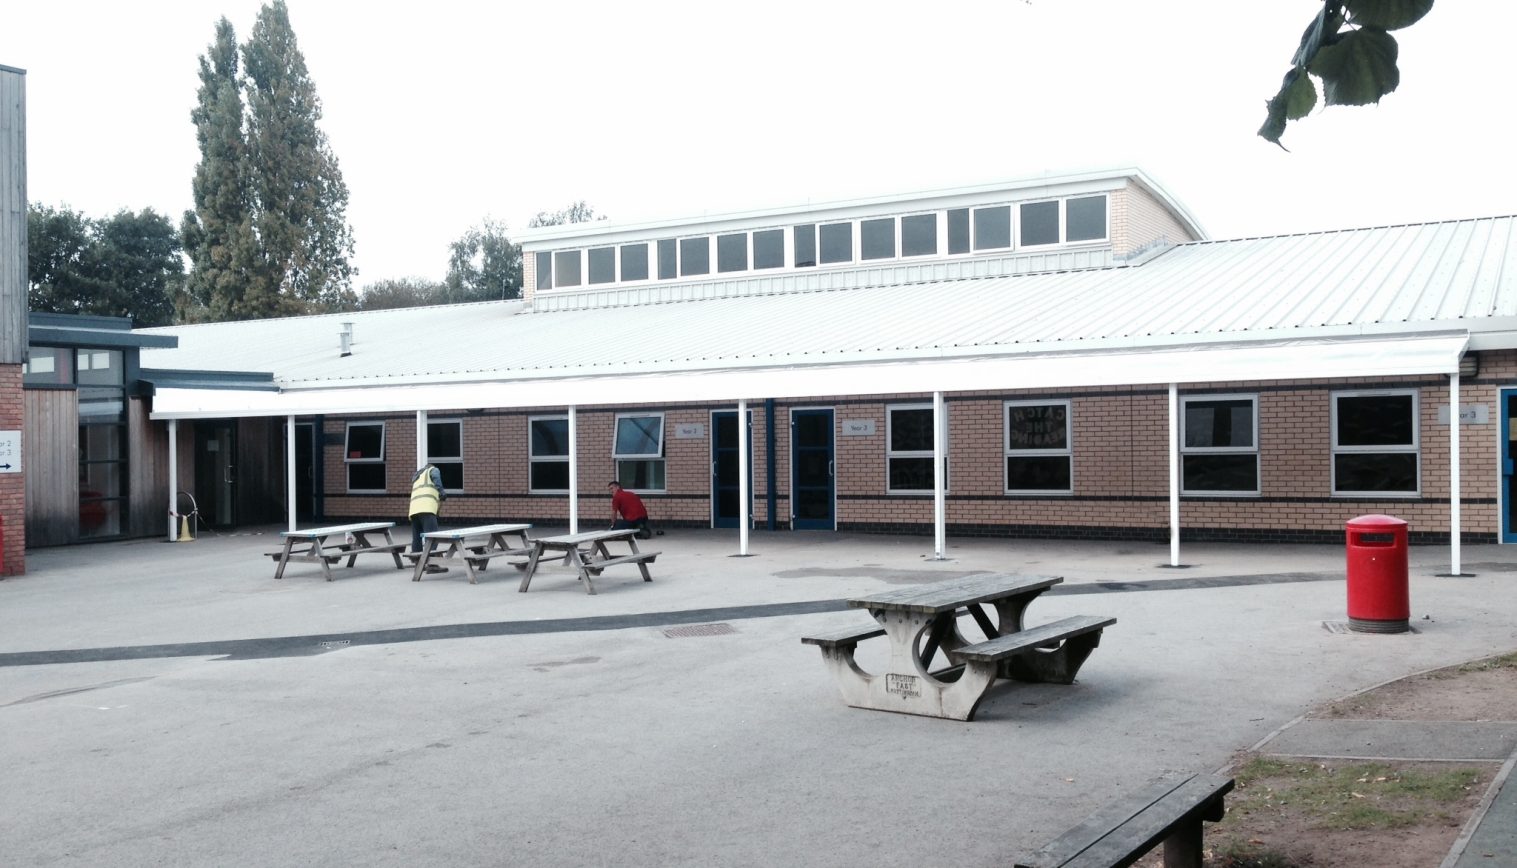 Broad Heath Community Primary School